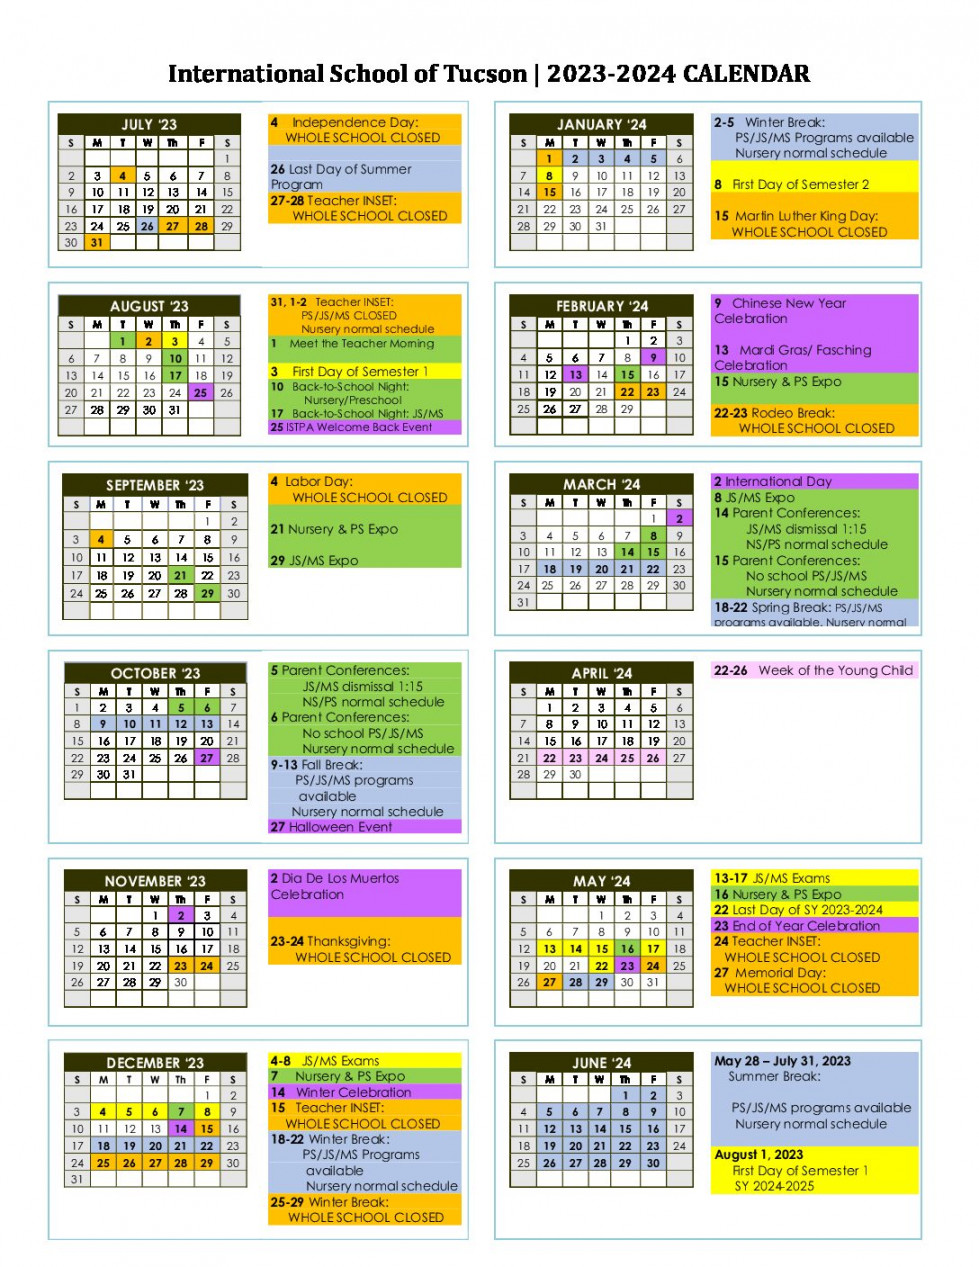 School Calendar  International school of Tucson